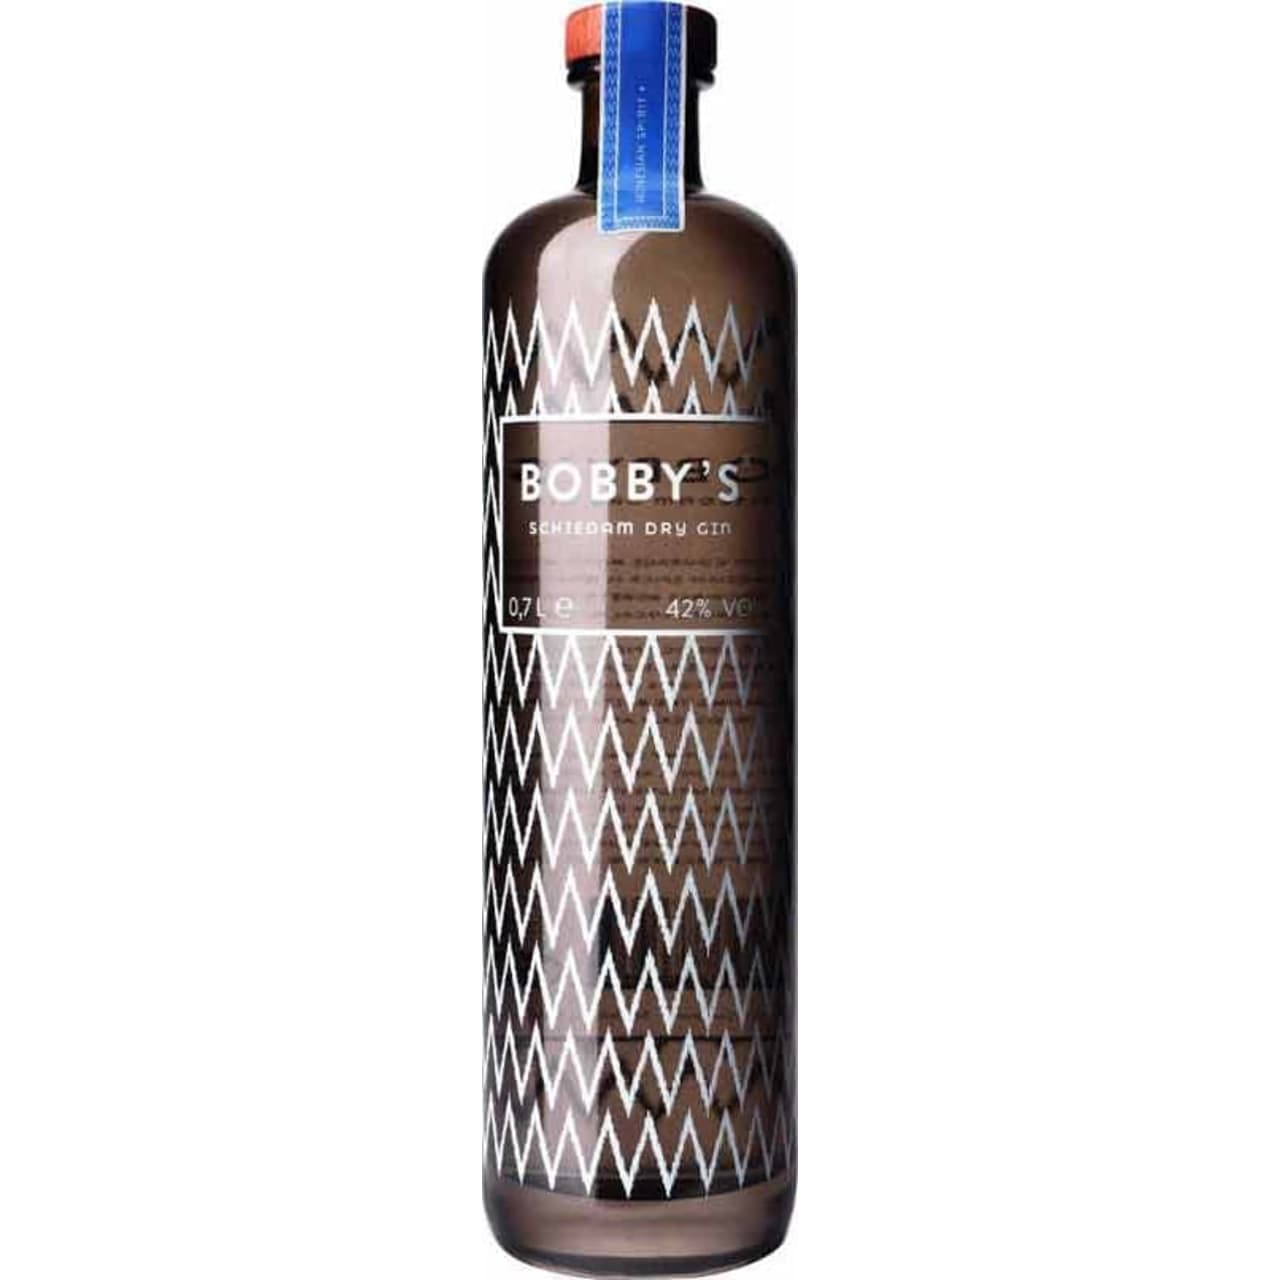 Product Image - Bobby's Schiedam Dry Gin